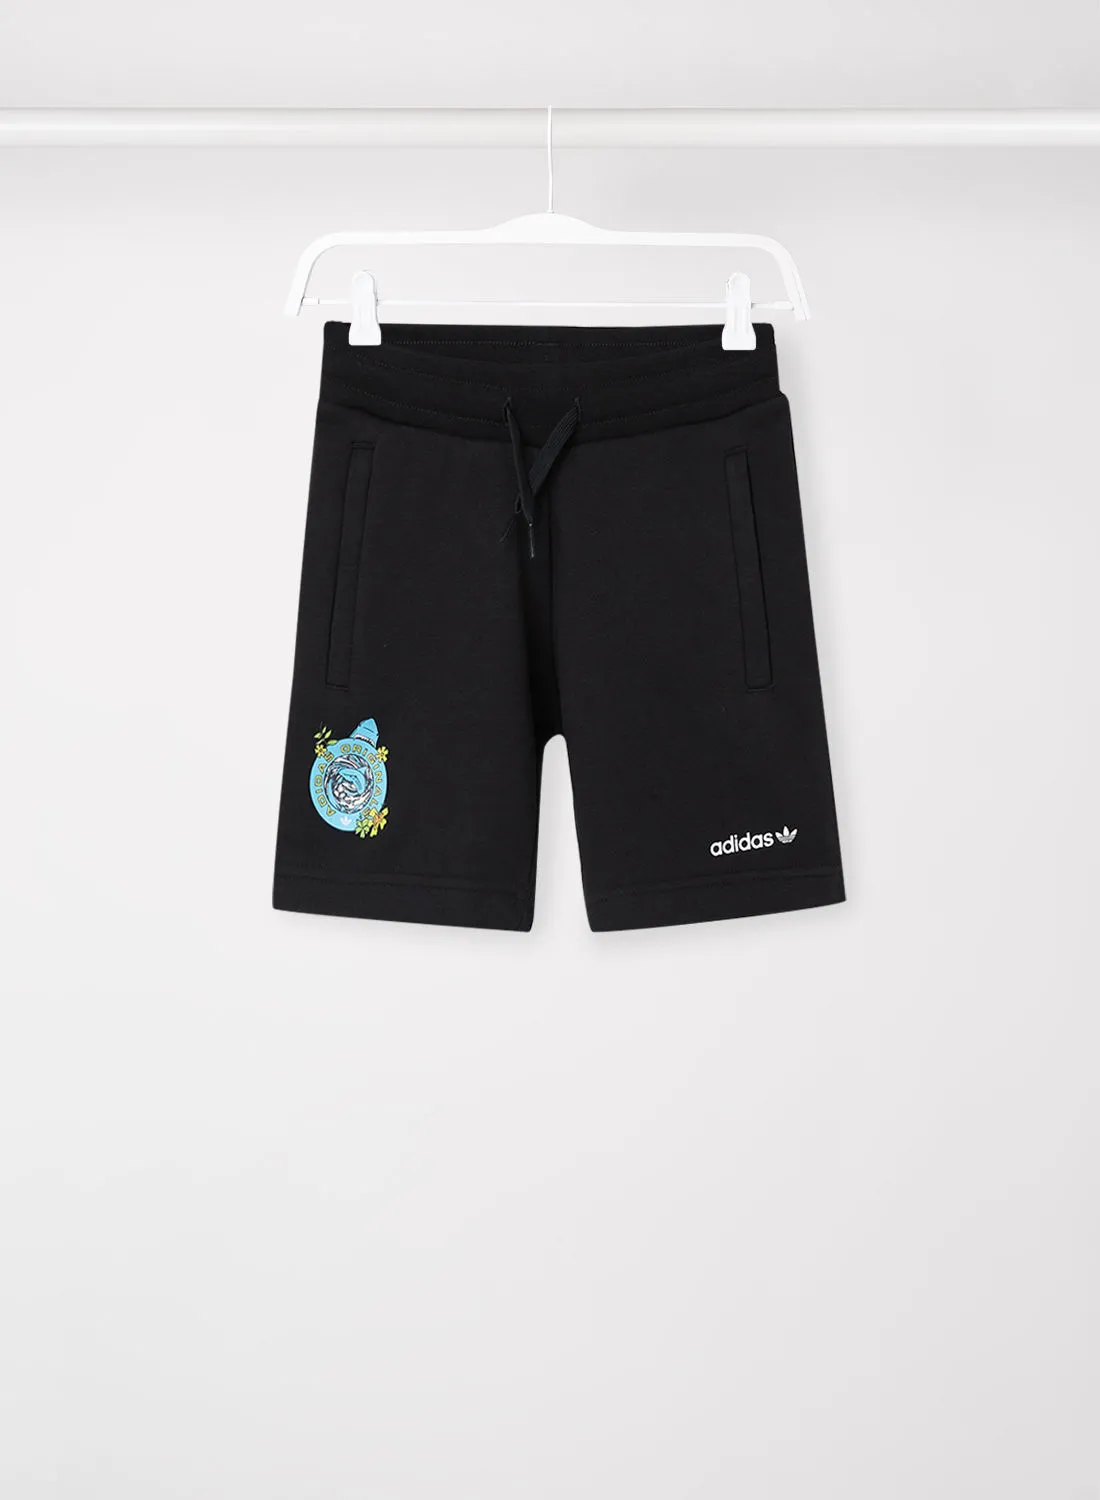 adidas Originals Boys Graphic Stoked Beach Shorts